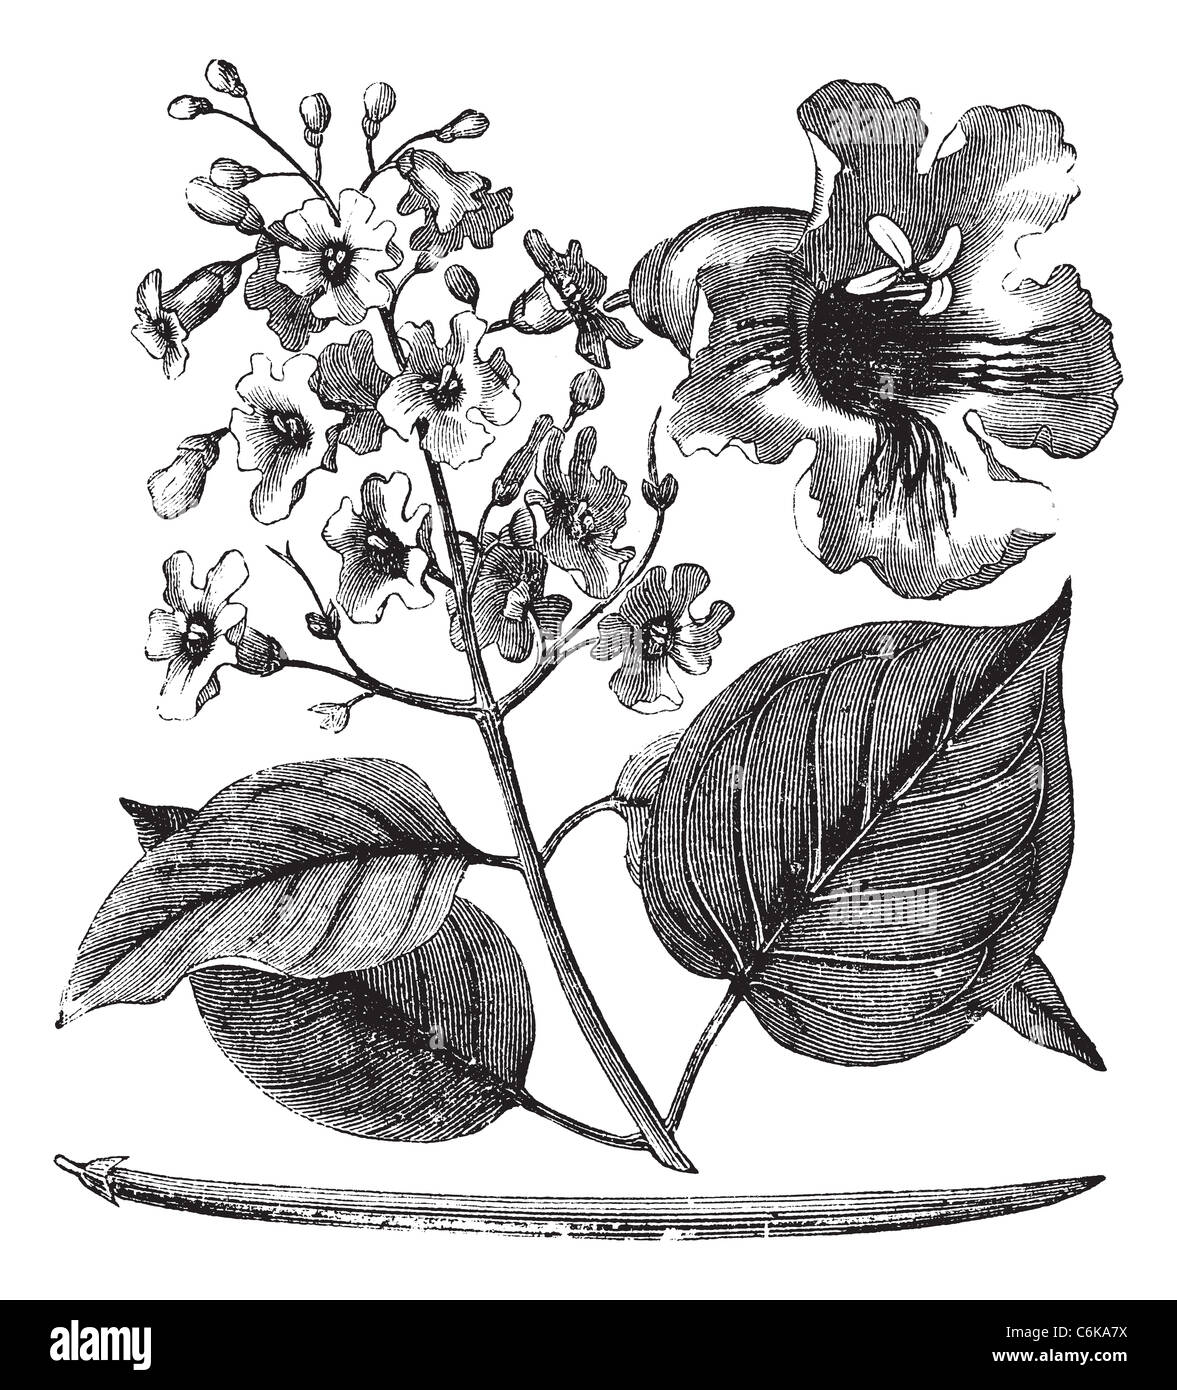 Catalpa bignonioides or cigar tree vintage engraving. Old engraved illustration of blossoms of catalpa tree. Stock Photo